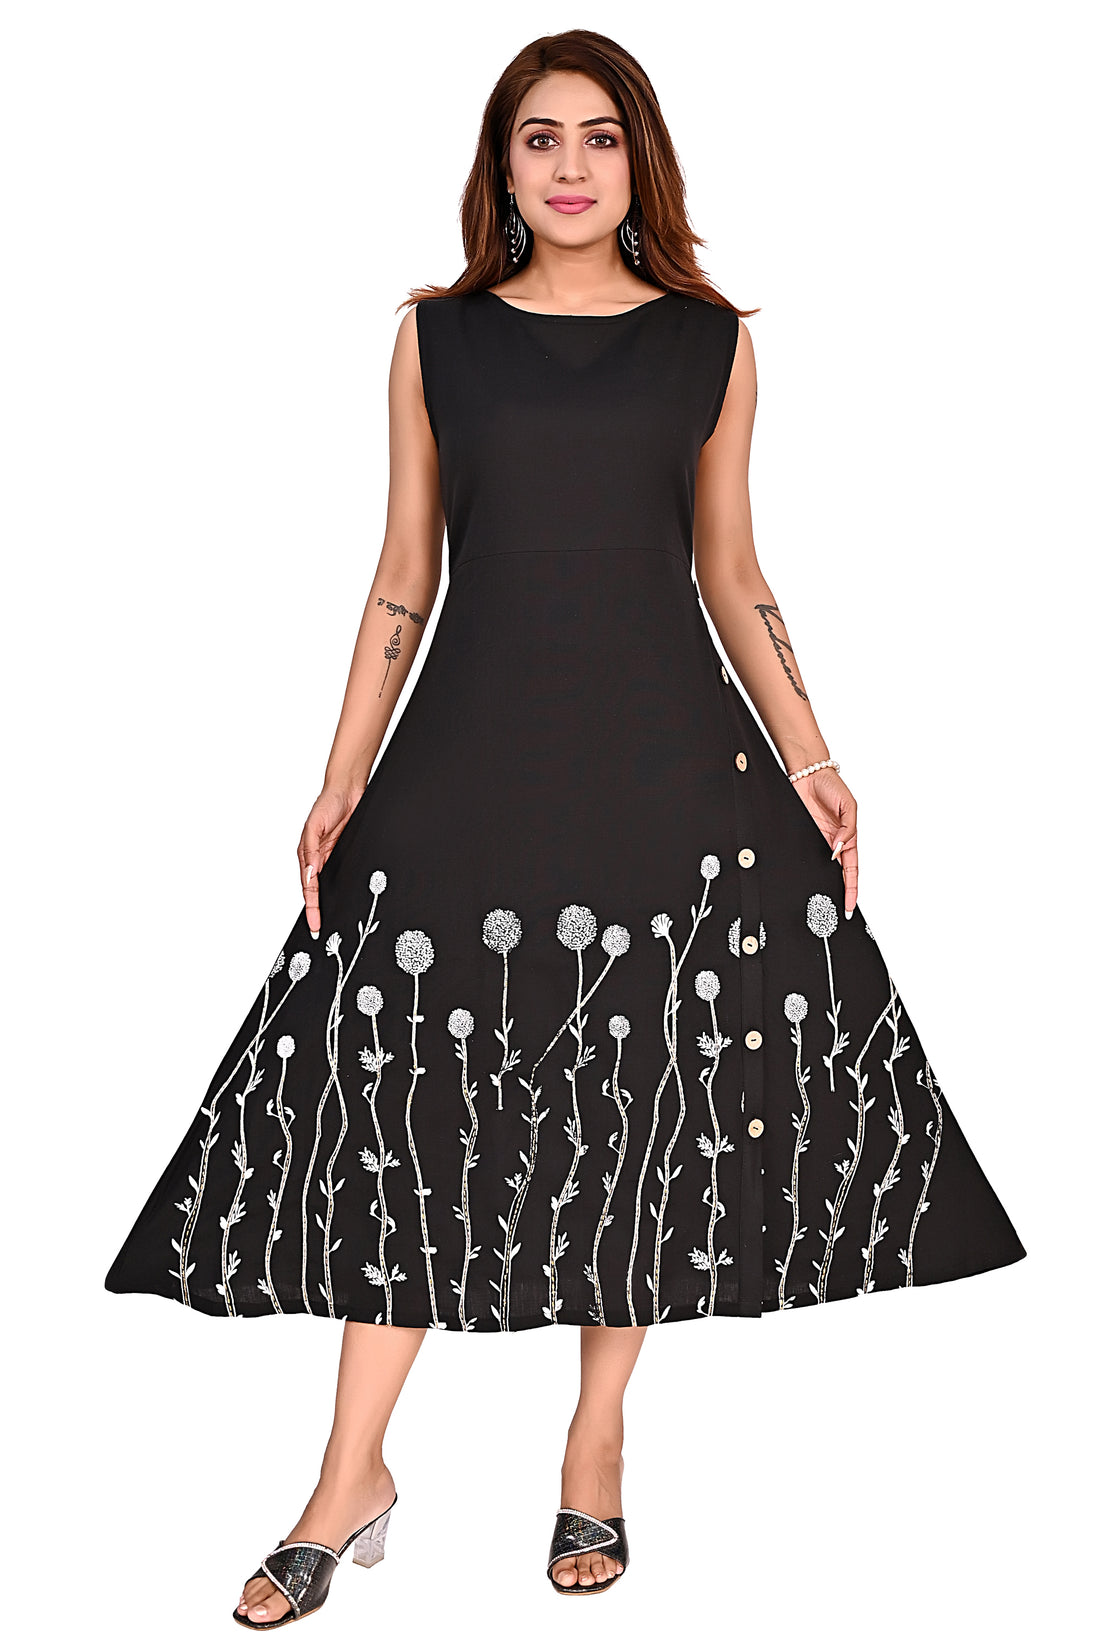 Nirmal online Premium cotton tunic Dress for Women in Black colour